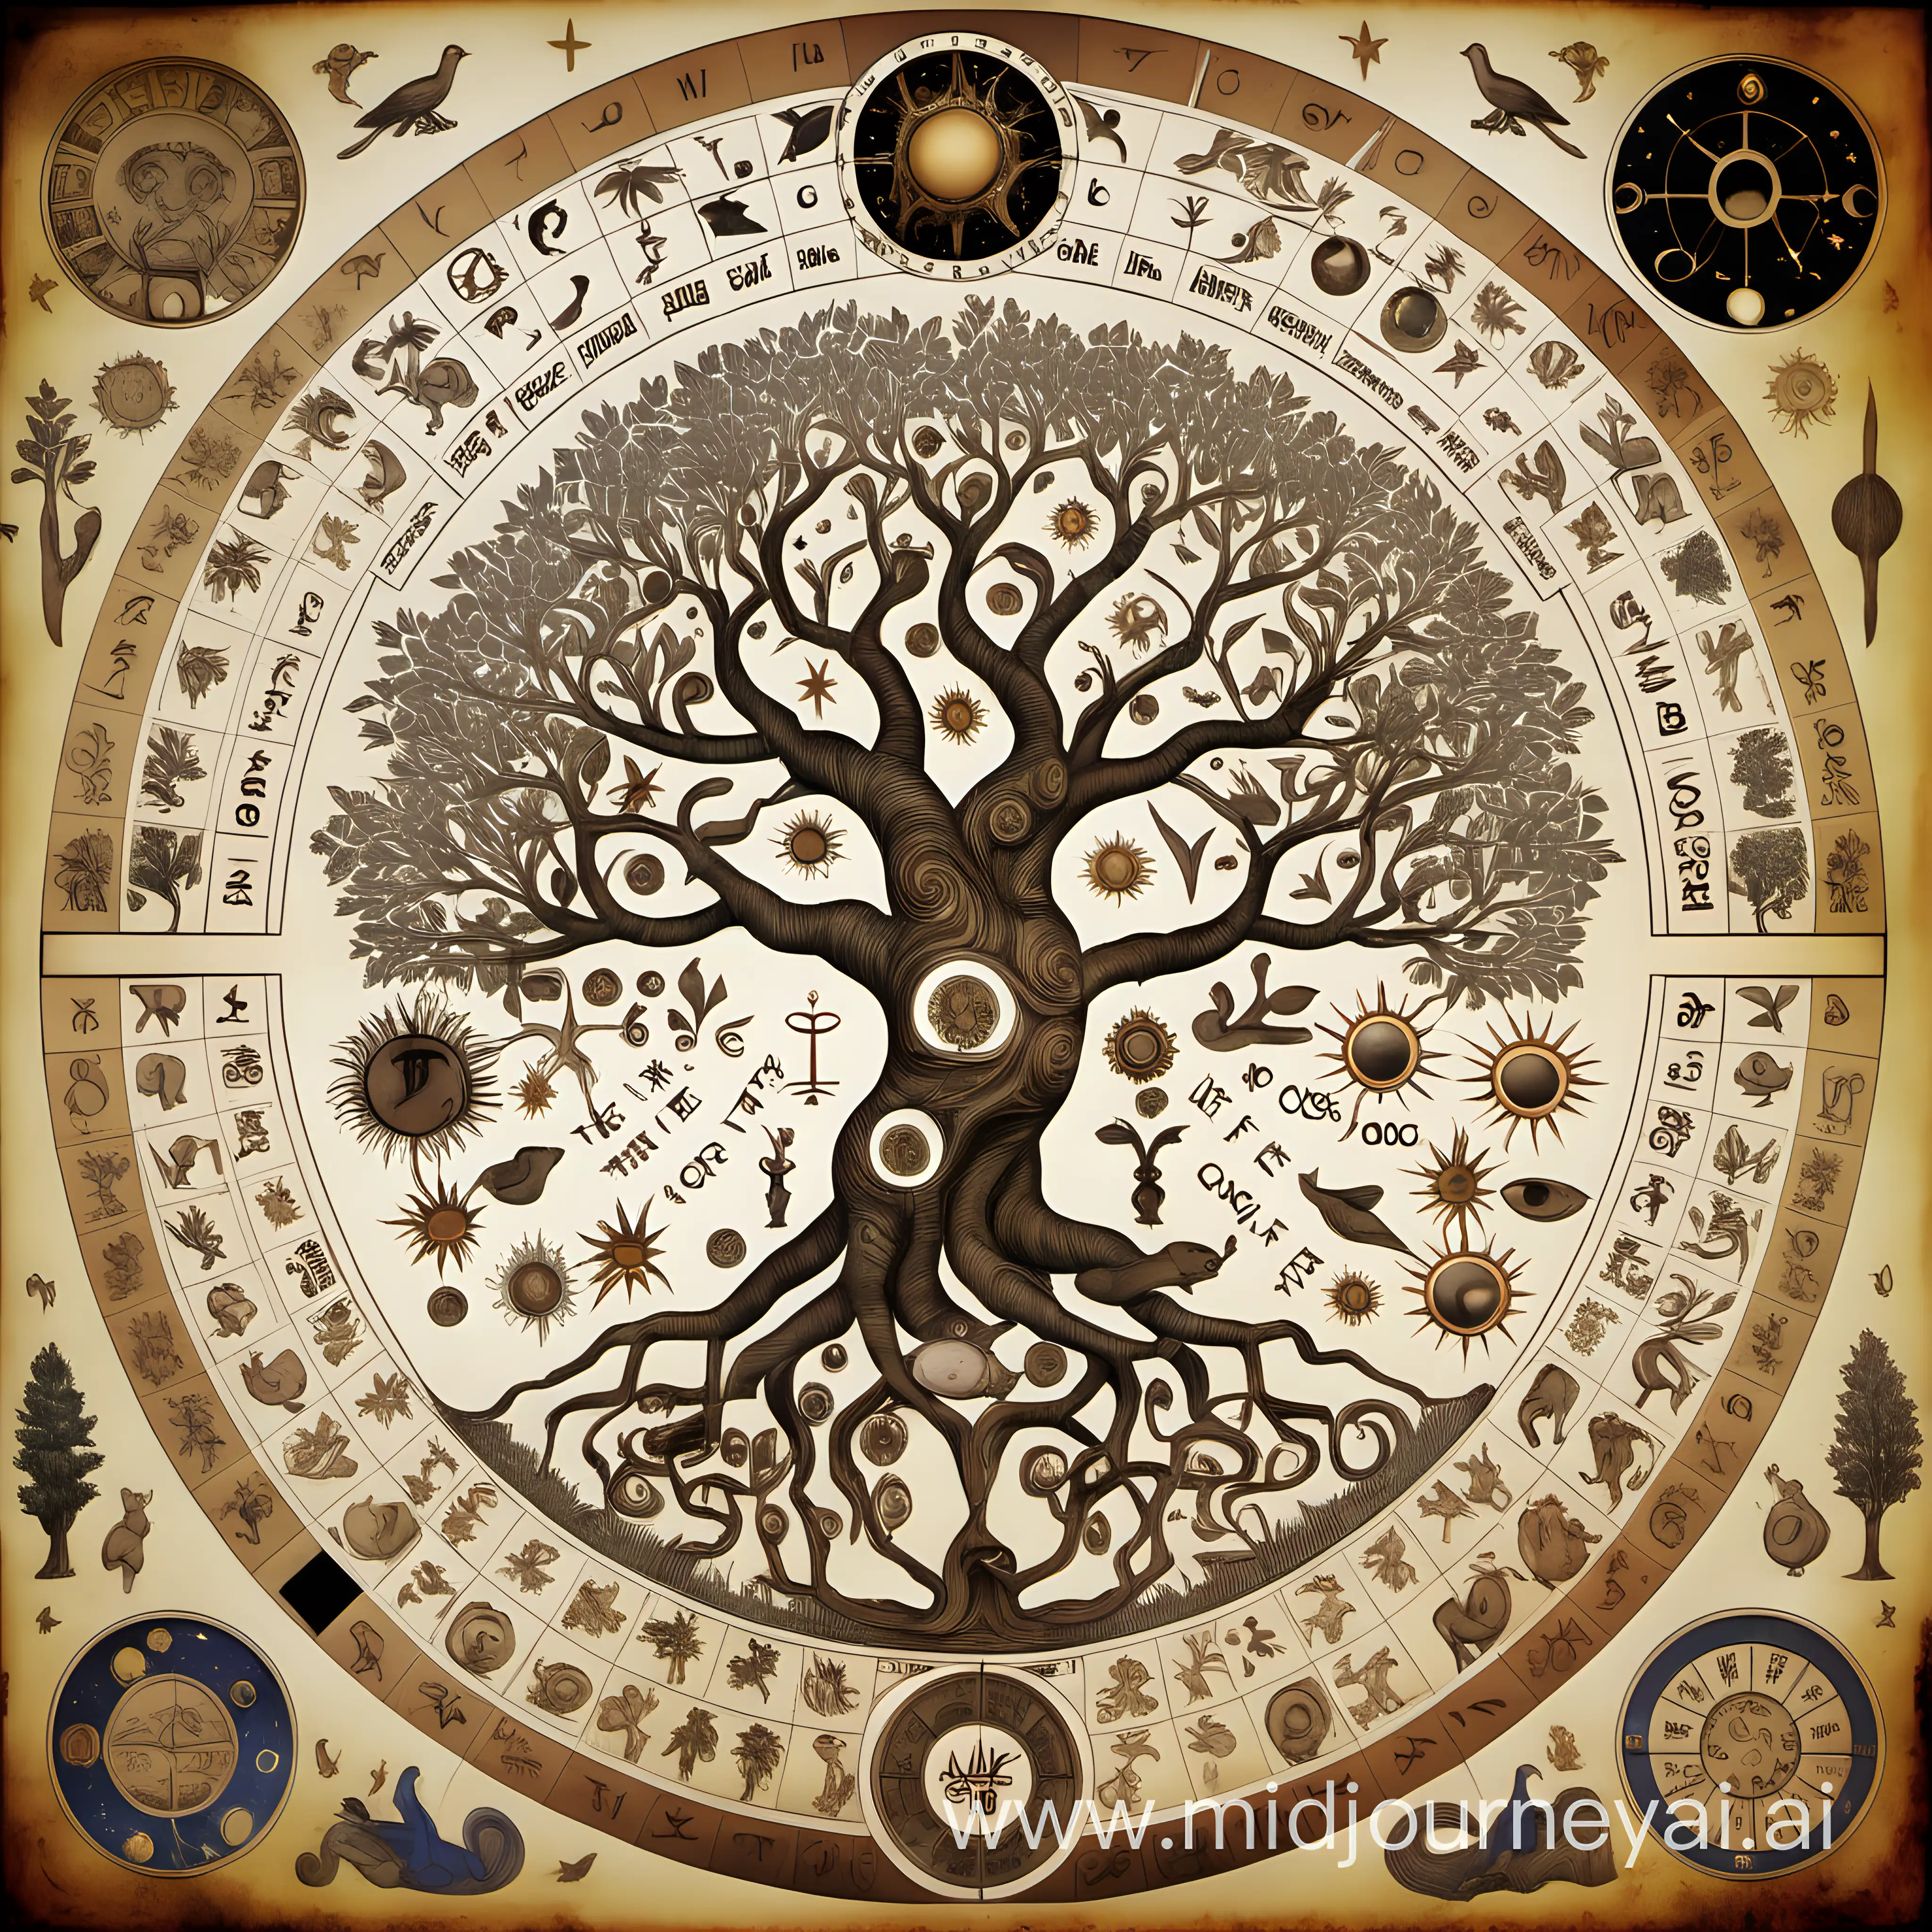 Mystical Tree of Life Embracing Zodiac and Cosmic Wonders